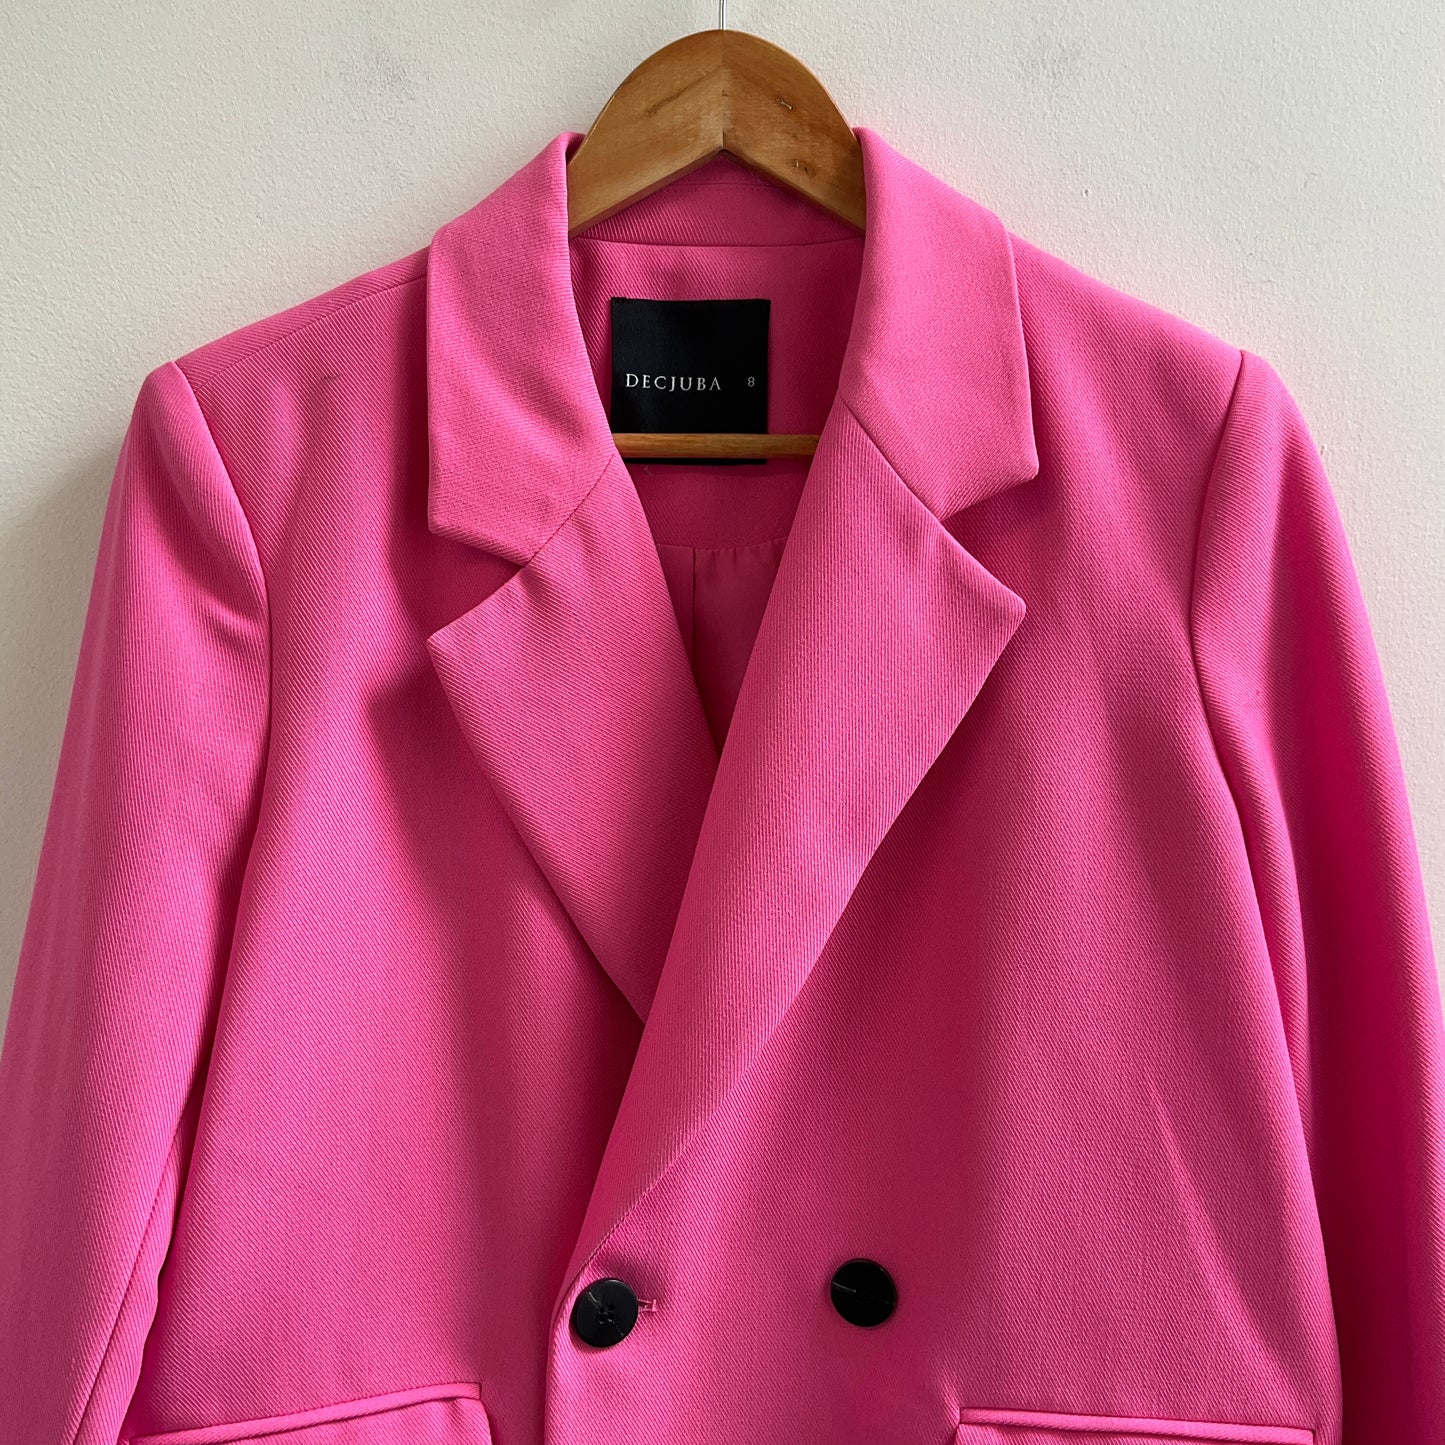 Decjuba - Pink Dress Jacket